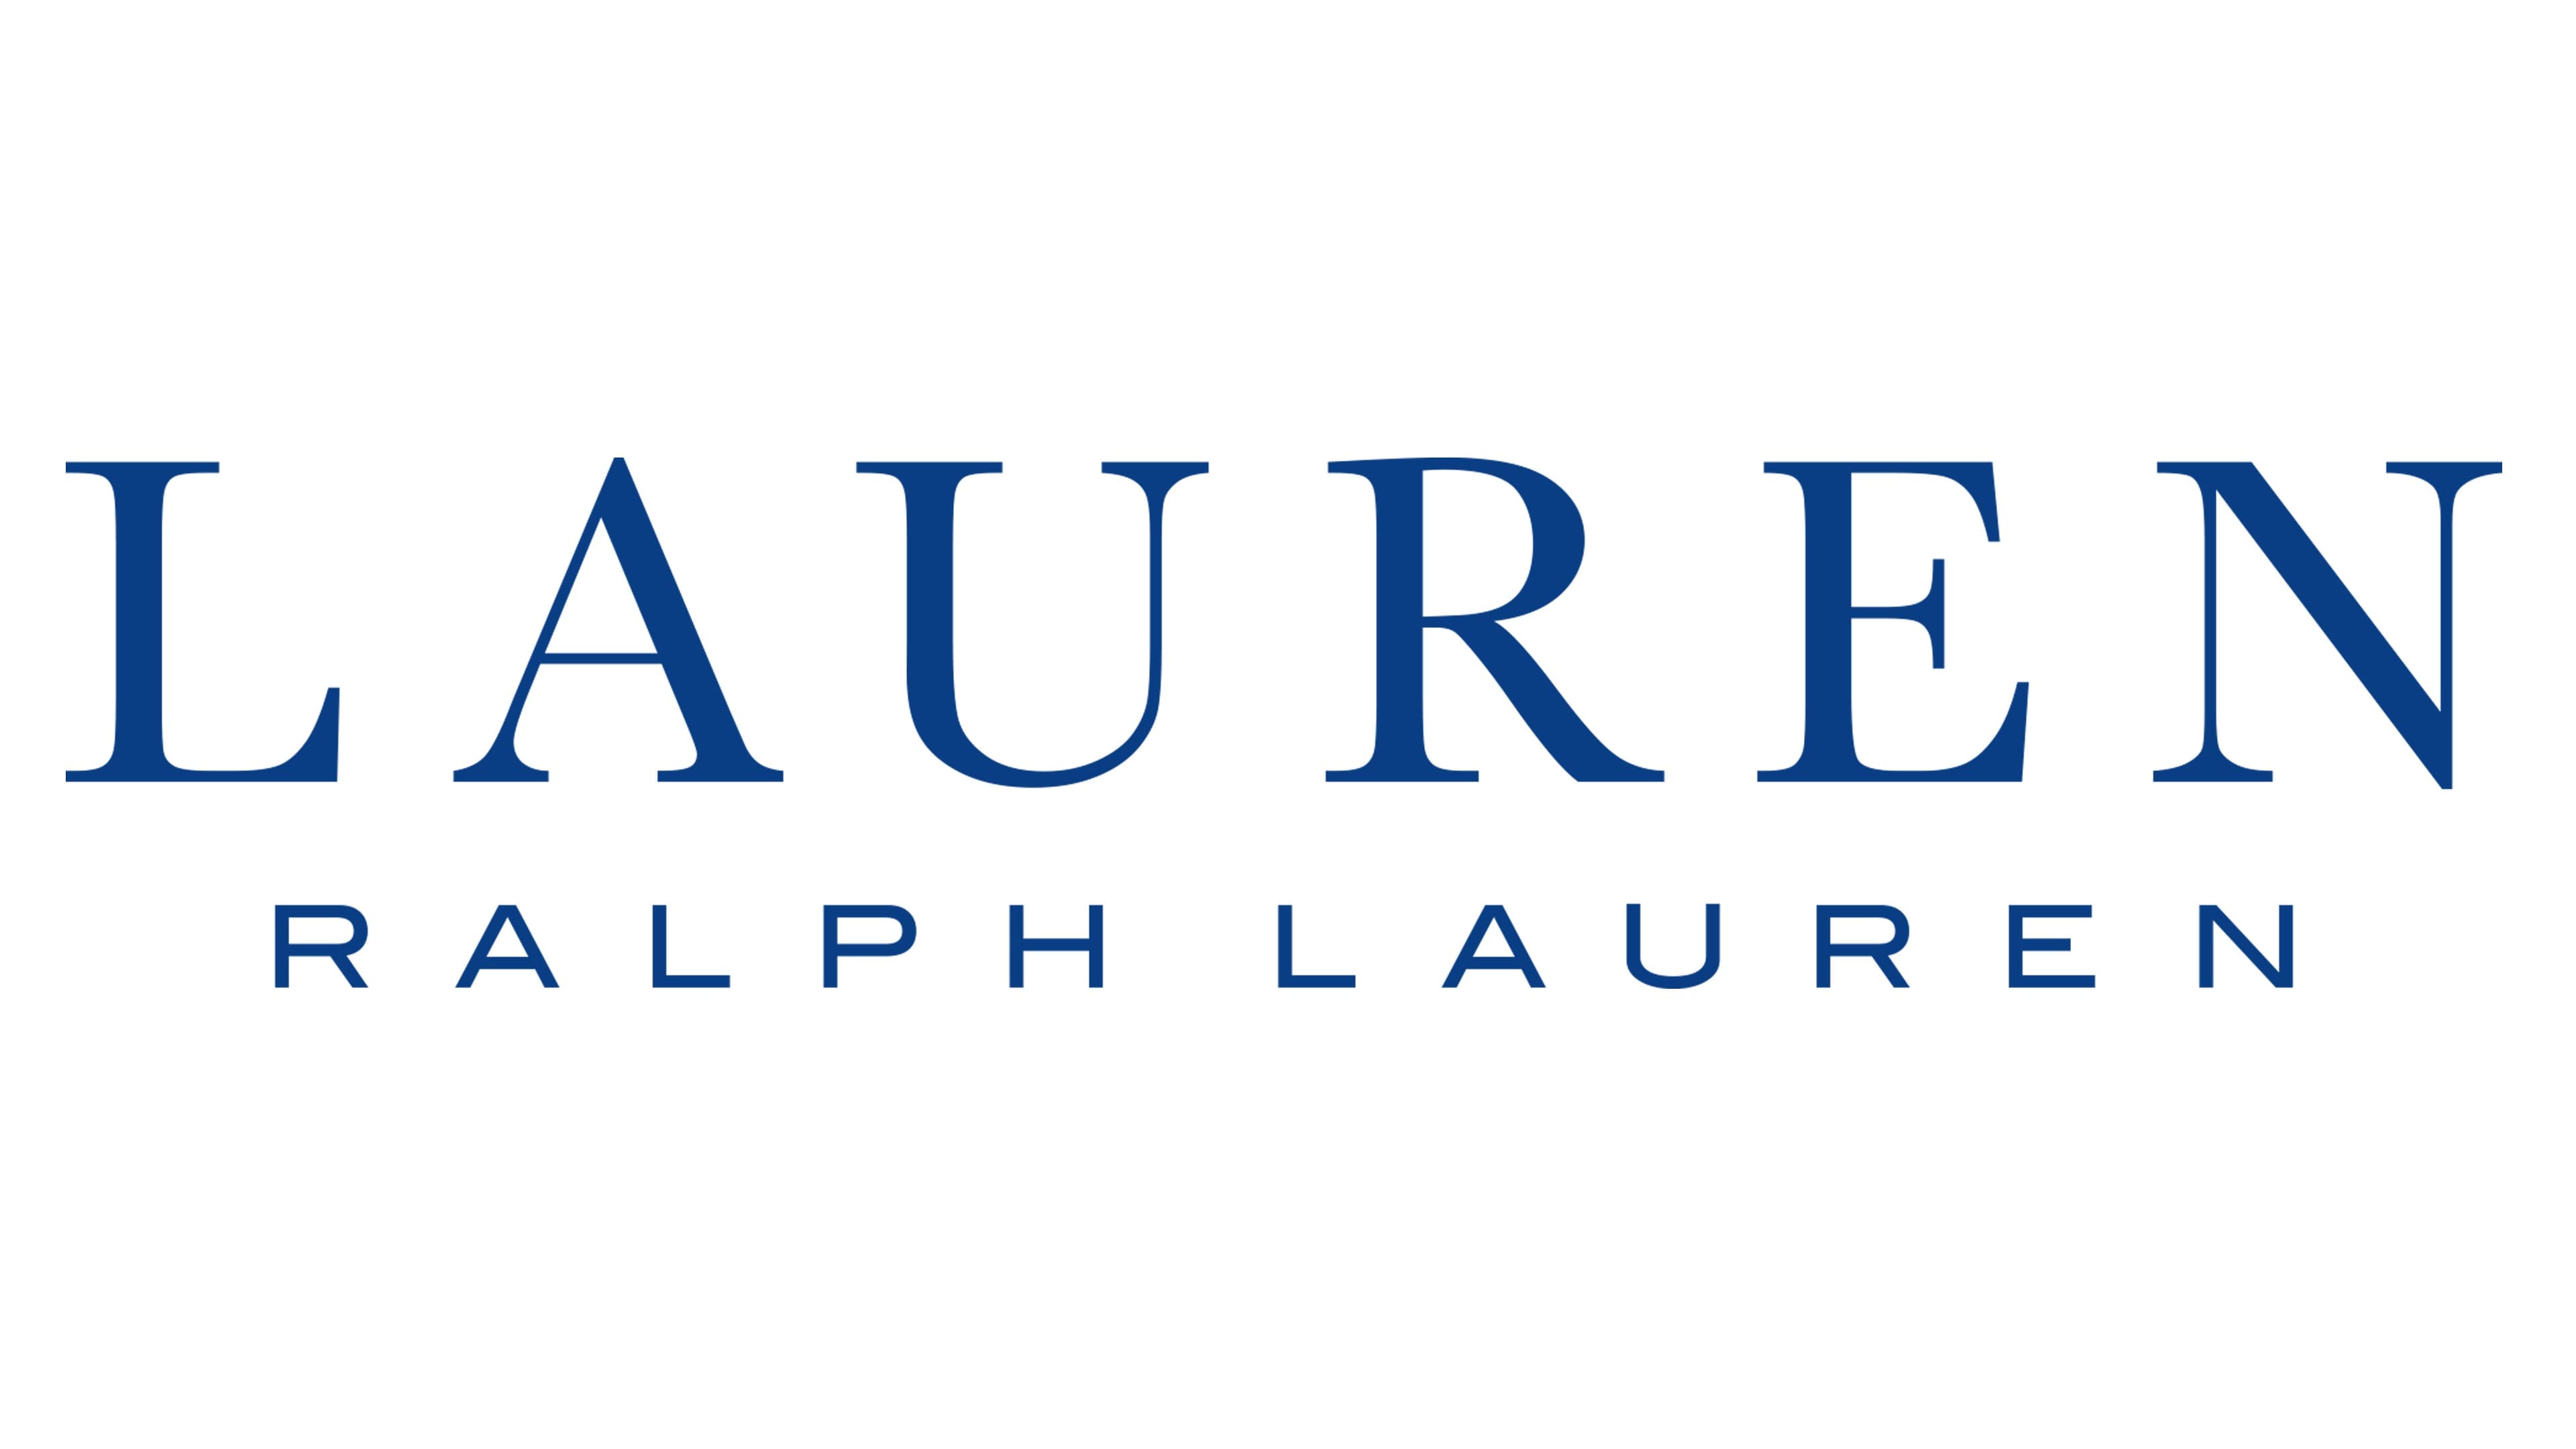 Lauren Ralph Lauren Logo and symbol, meaning, history, PNG, brand